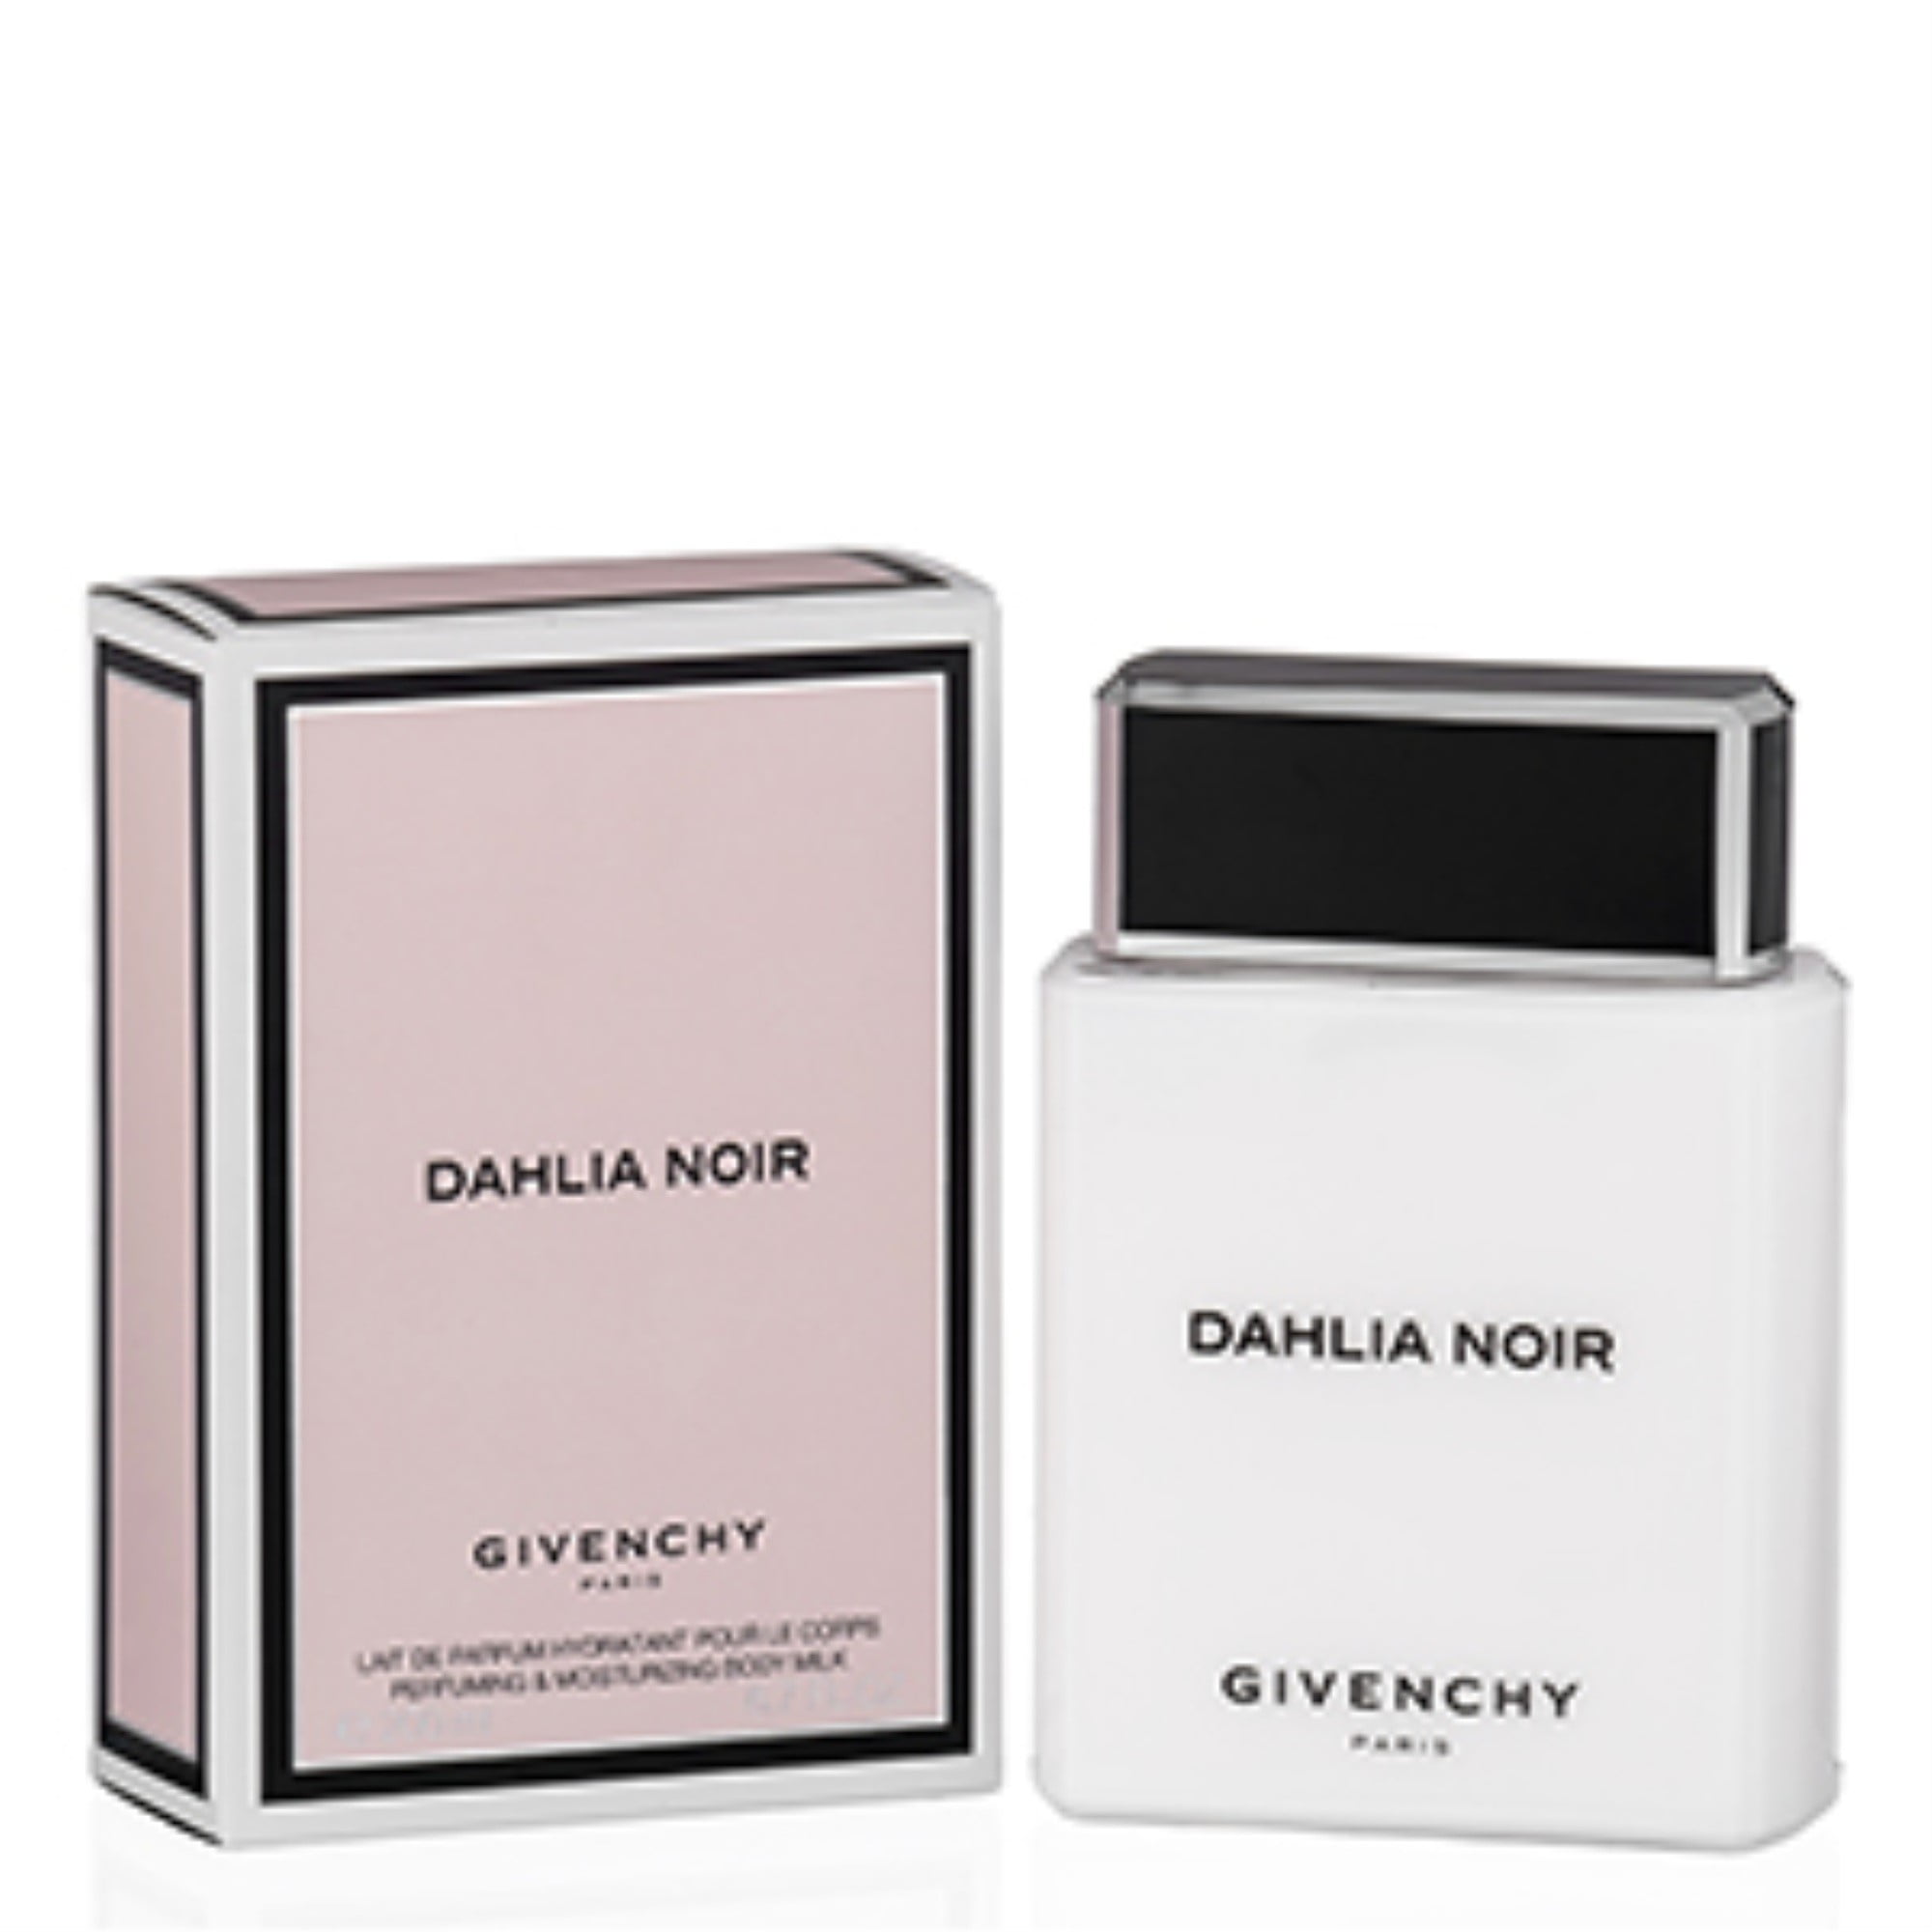 Givenchy Dahlia Noir Women's  Body Milk 